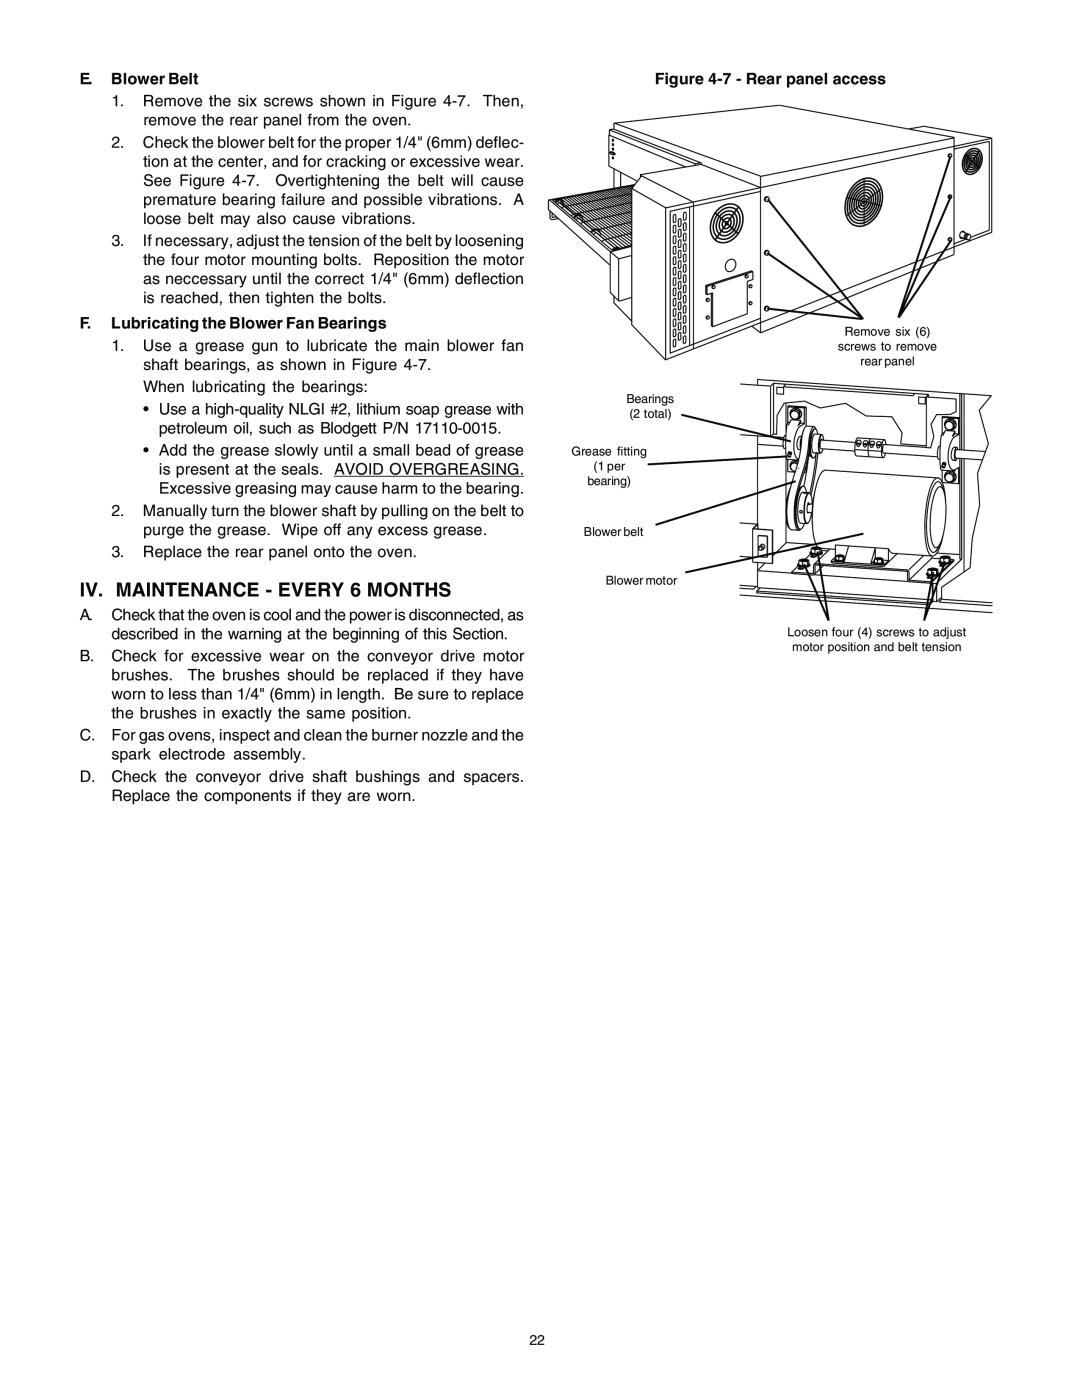 Blodgett BG2136 manual English, IV. MAINTENANCE - EVERY 6 MONTHS, E. Blower Belt, F. Lubricating the Blower Fan Bearings 